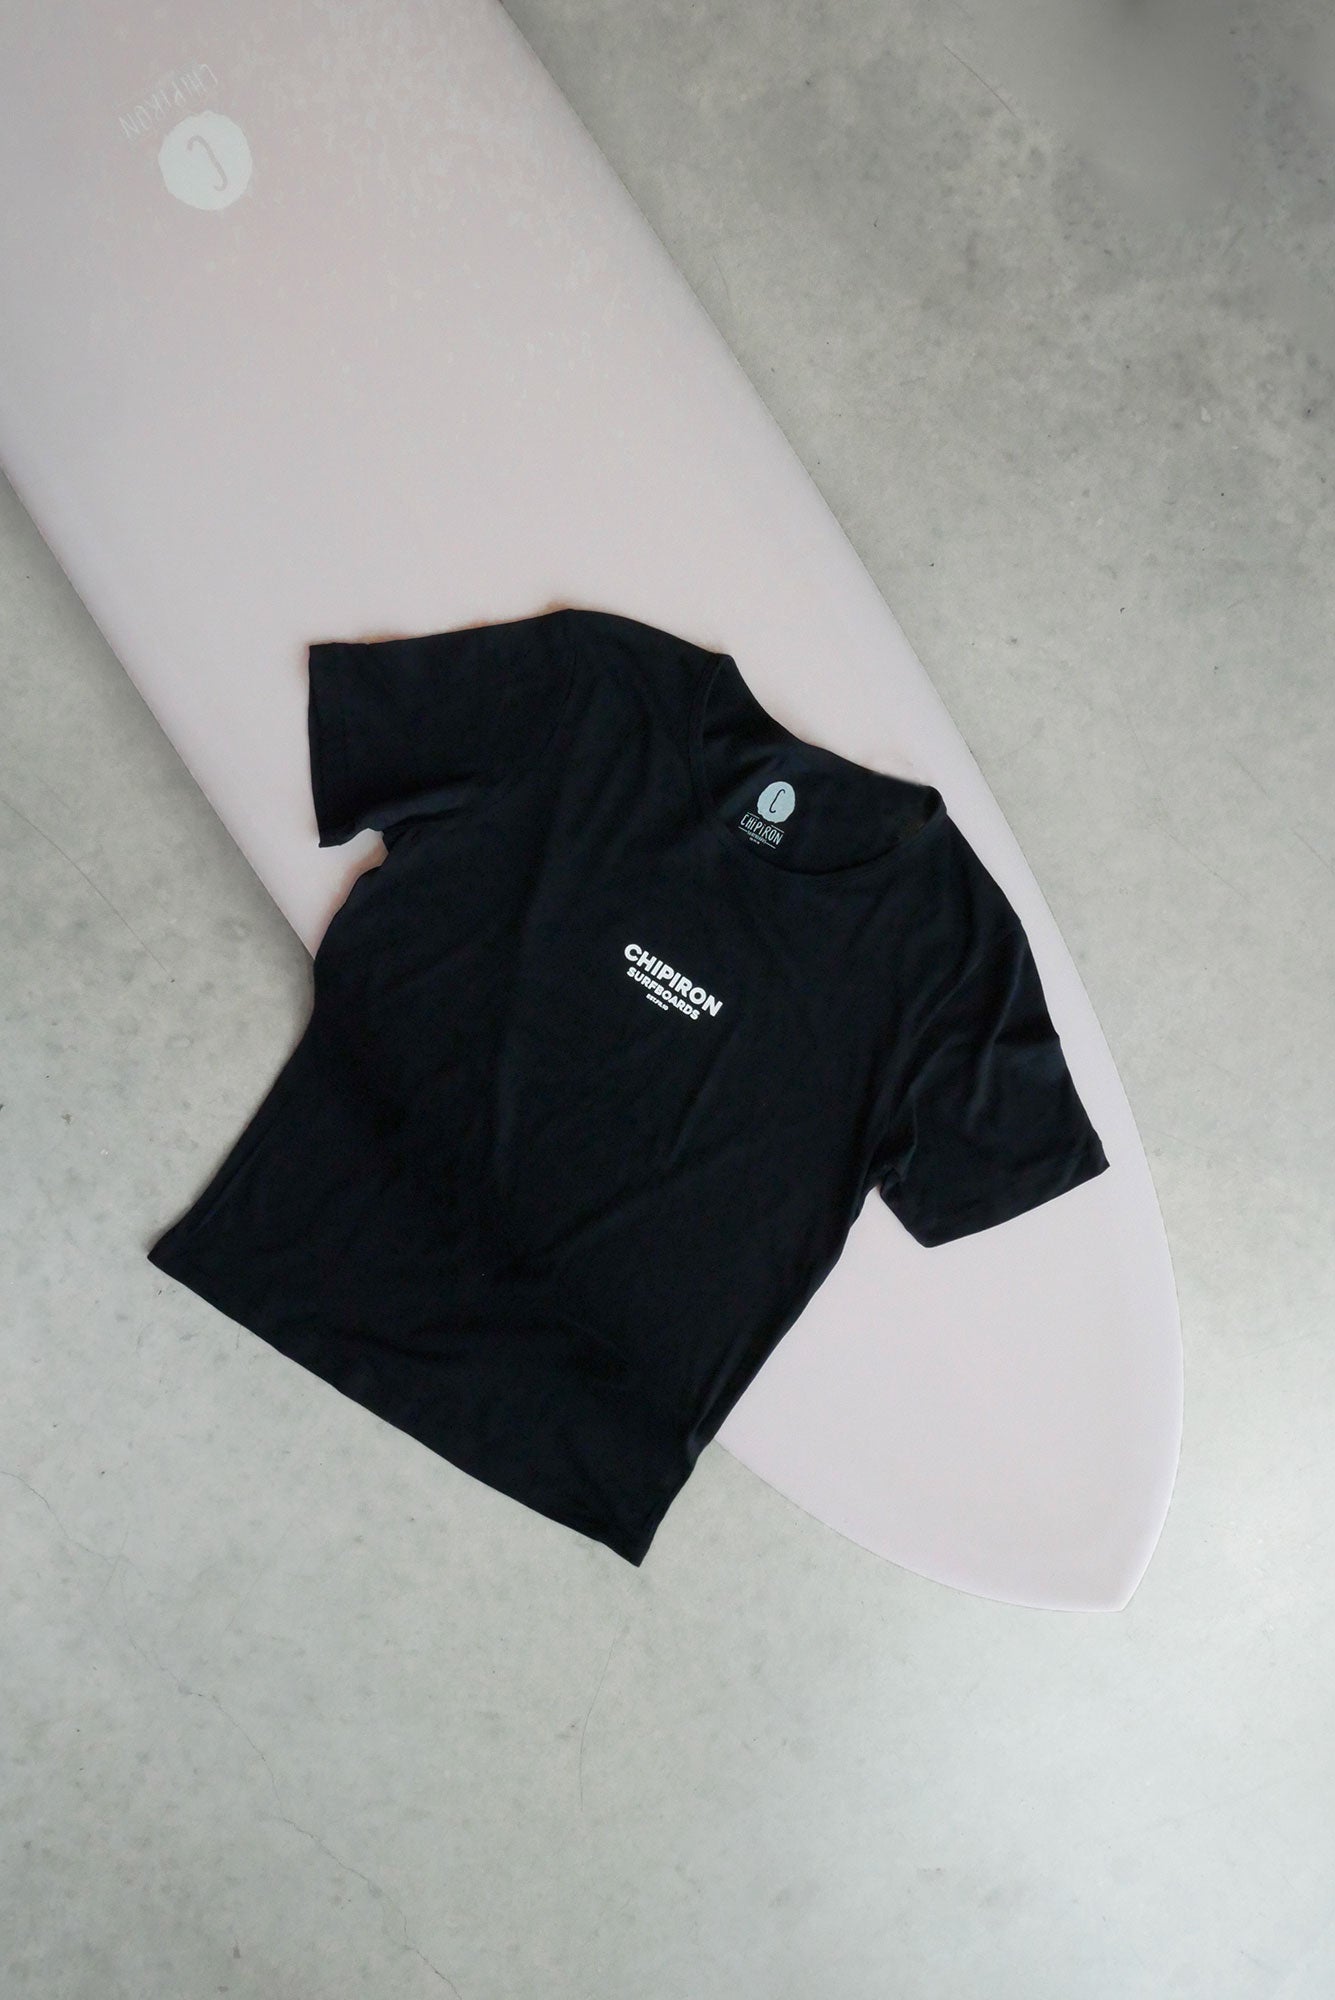 losange-tshirt-avant-chipiron-surfboards-hossegor